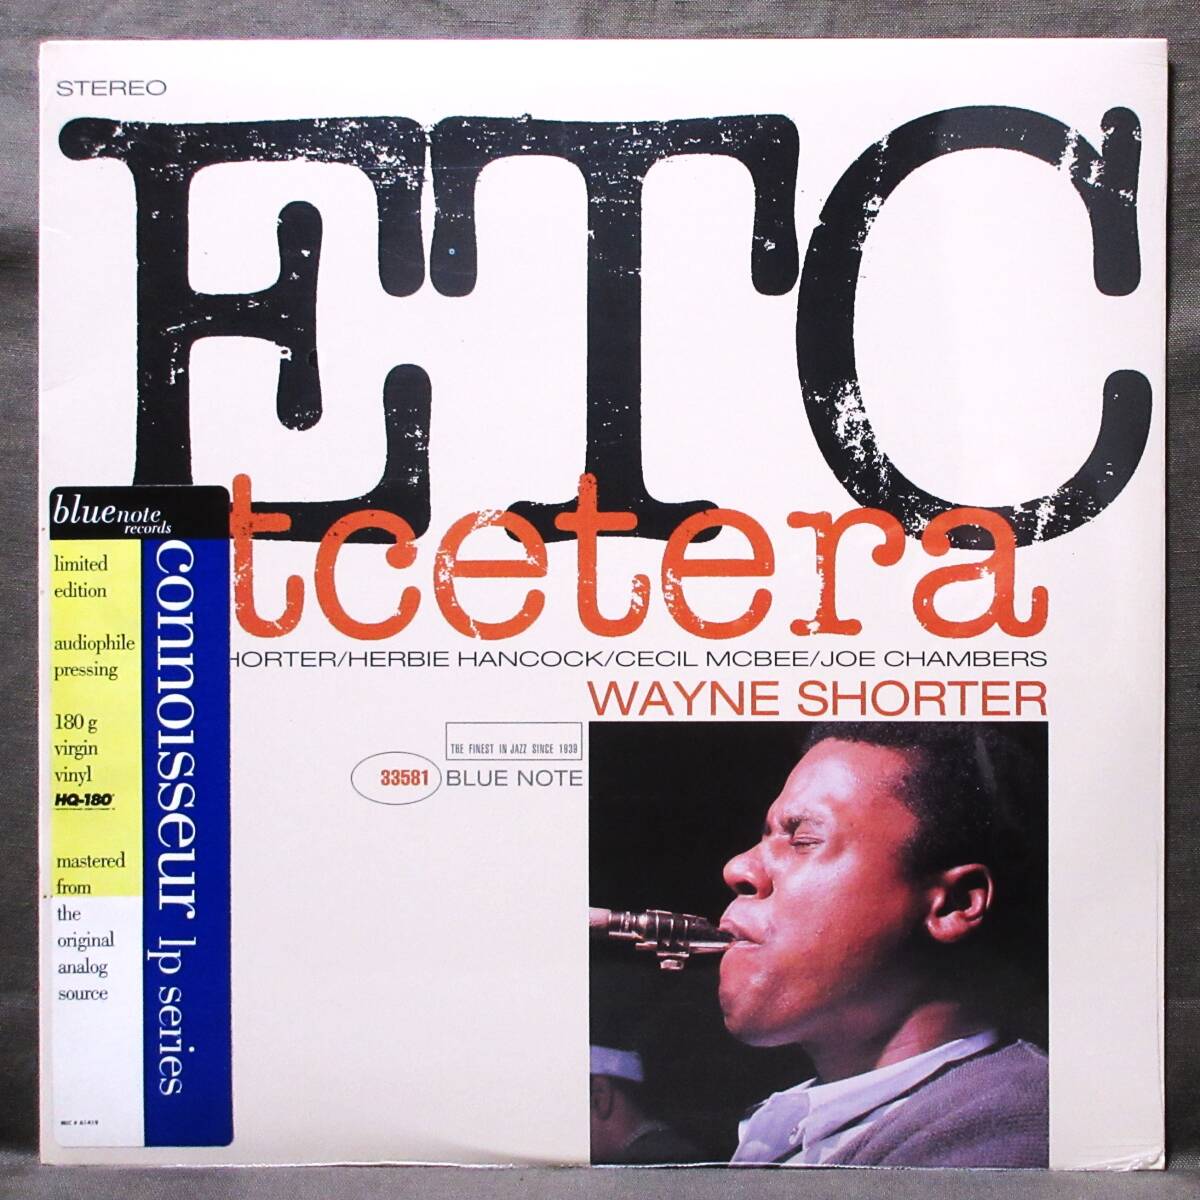 (LP) シールド未開封 US/BLUE NOTE WAYNE SHORTER [ETCETERA] 高音質リマスター/限定盤/180g/ウェイン・ショーター/1995年/B1 7243 8 ...の画像1